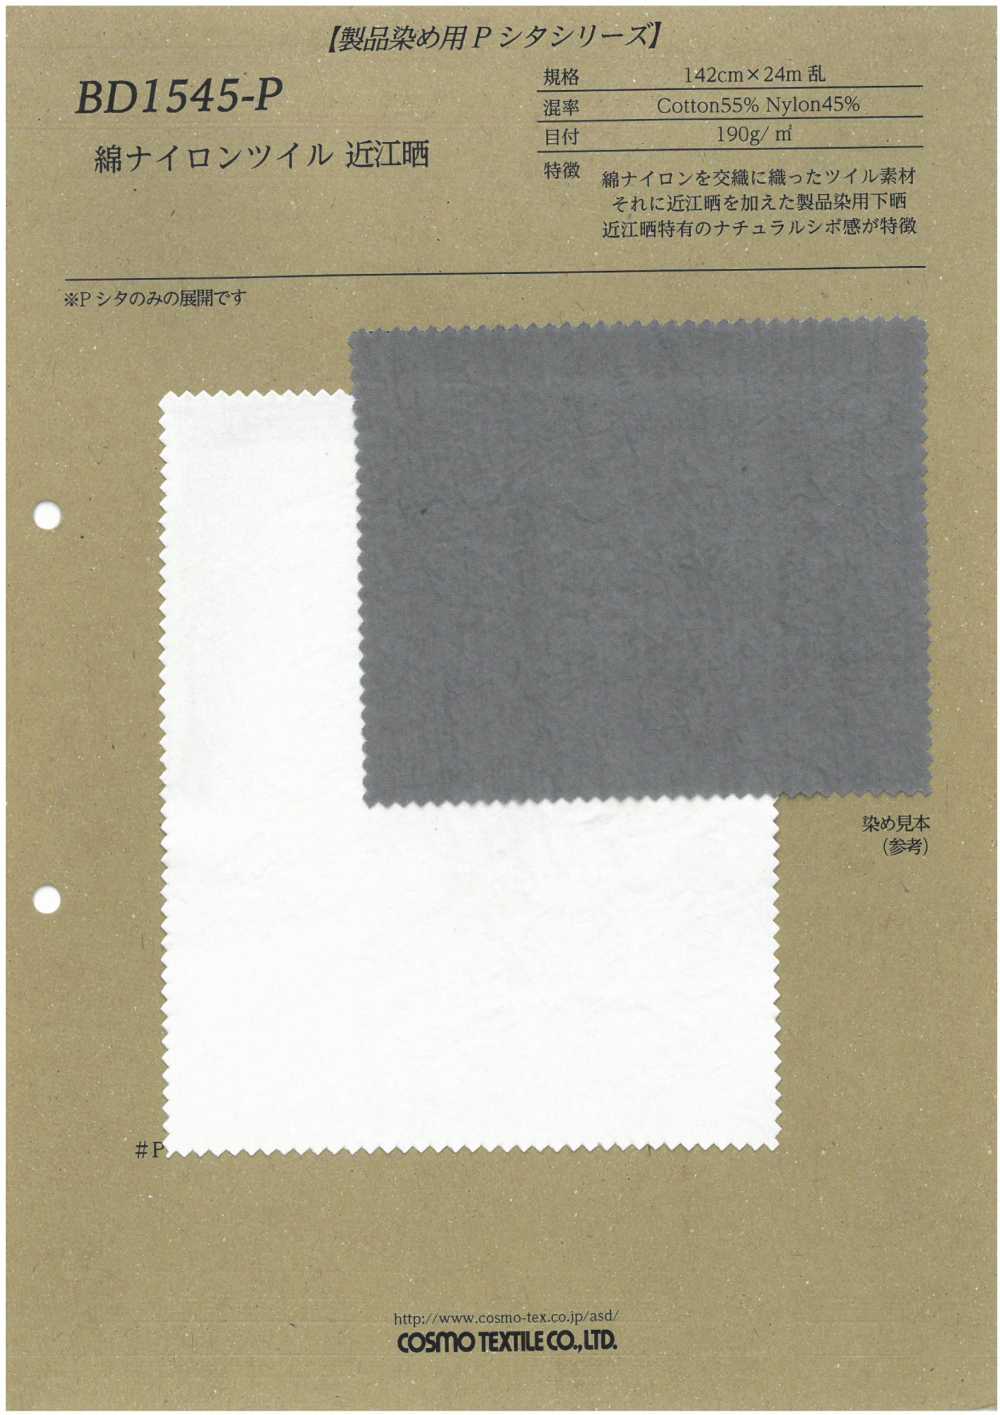 BD1545-P Sergé De Coton Et Nylon Omi Blanchi[Fabrication De Textile] COSMO TEXTILE